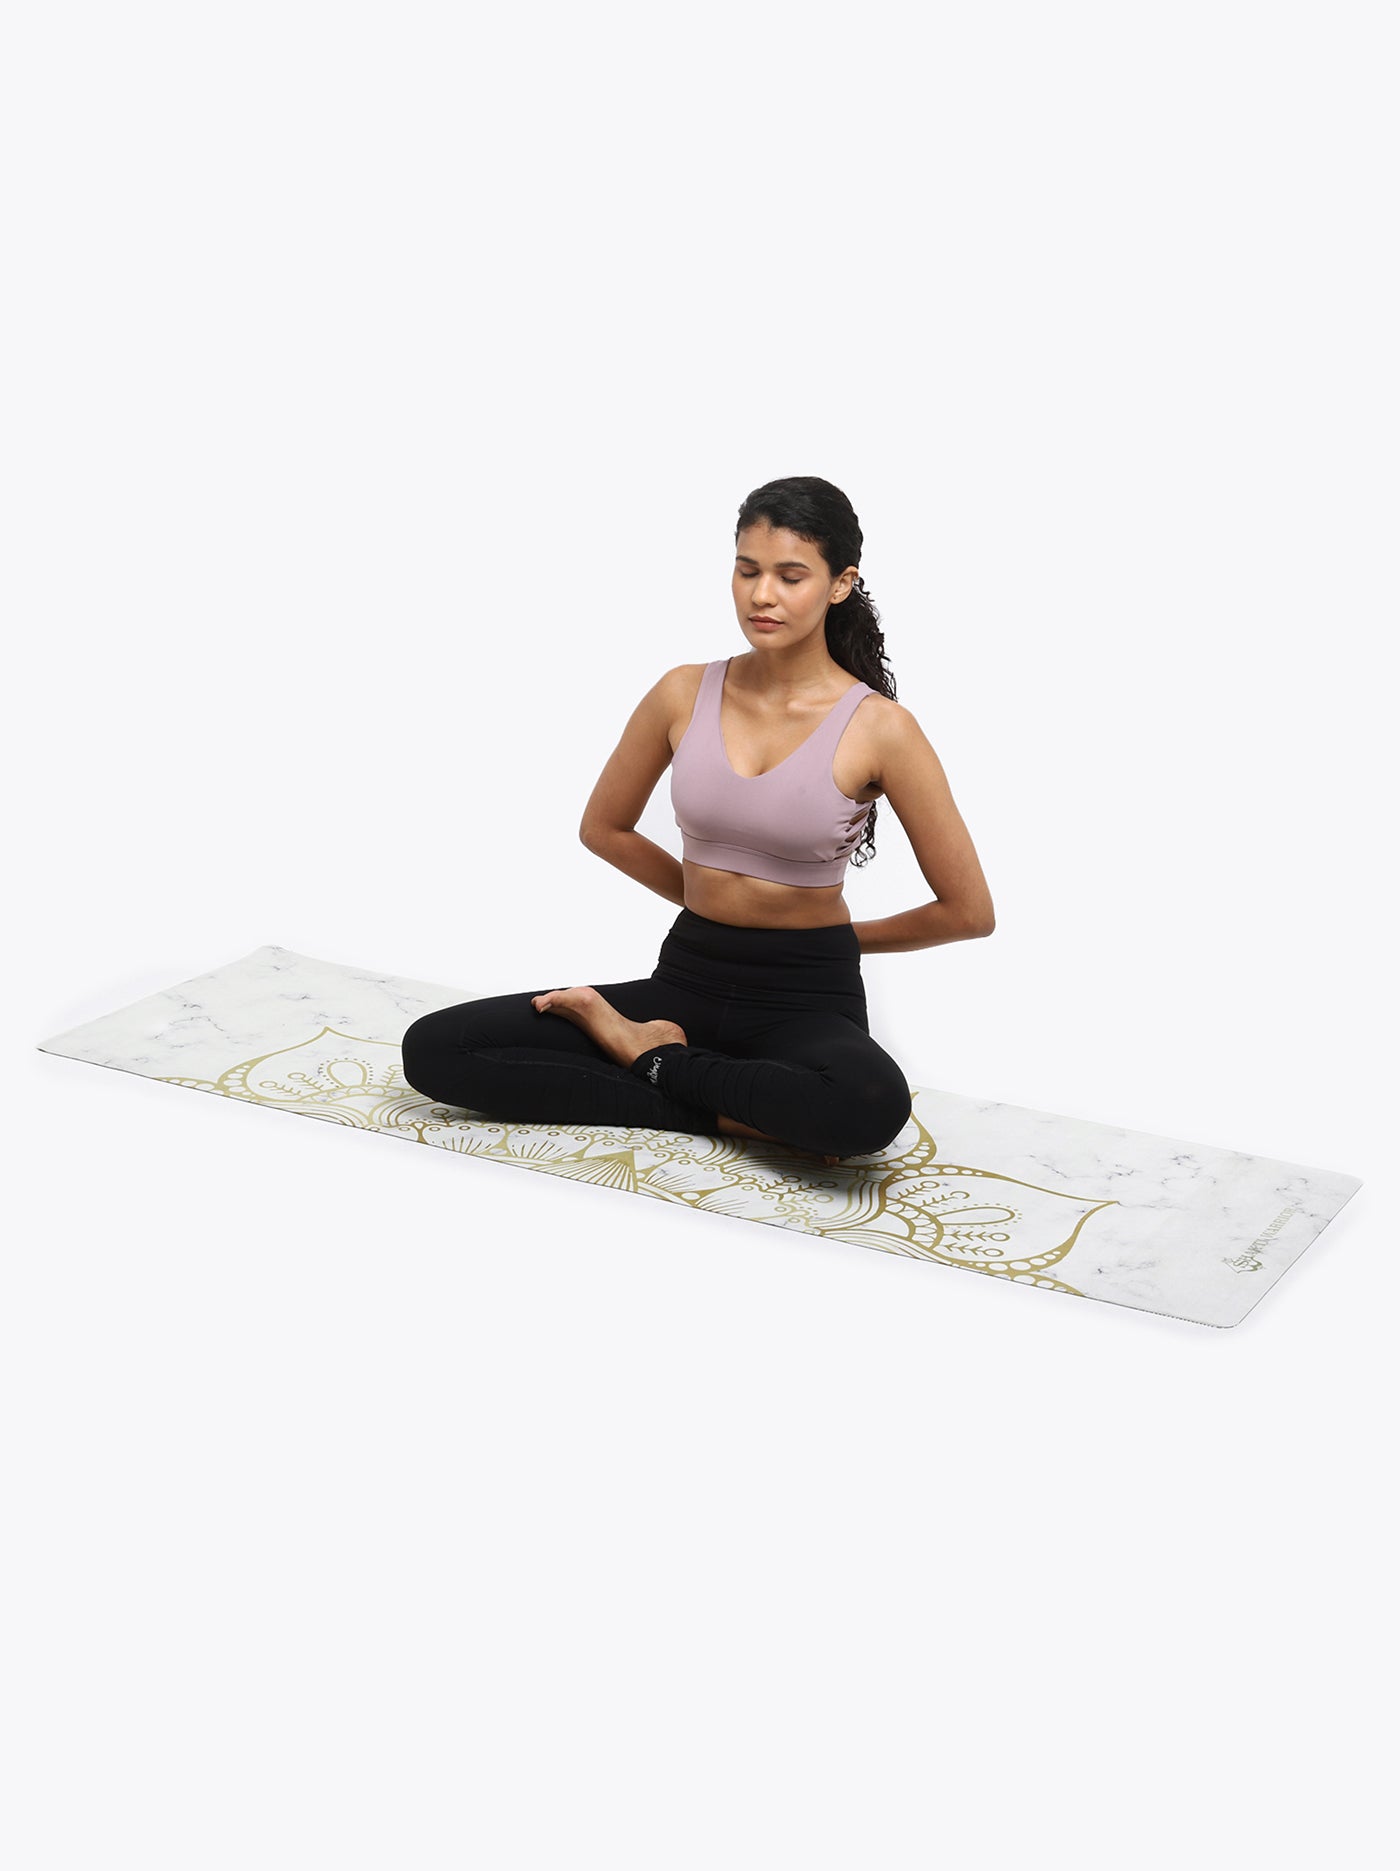 183cm*68cm*8mm Lotus Floral Printed, Yoga mat Non-Slip Indian Mandala  Tapestry, Excellent Grip, mat for Yoga, Pilates Exercise Pads, Mats -   Canada